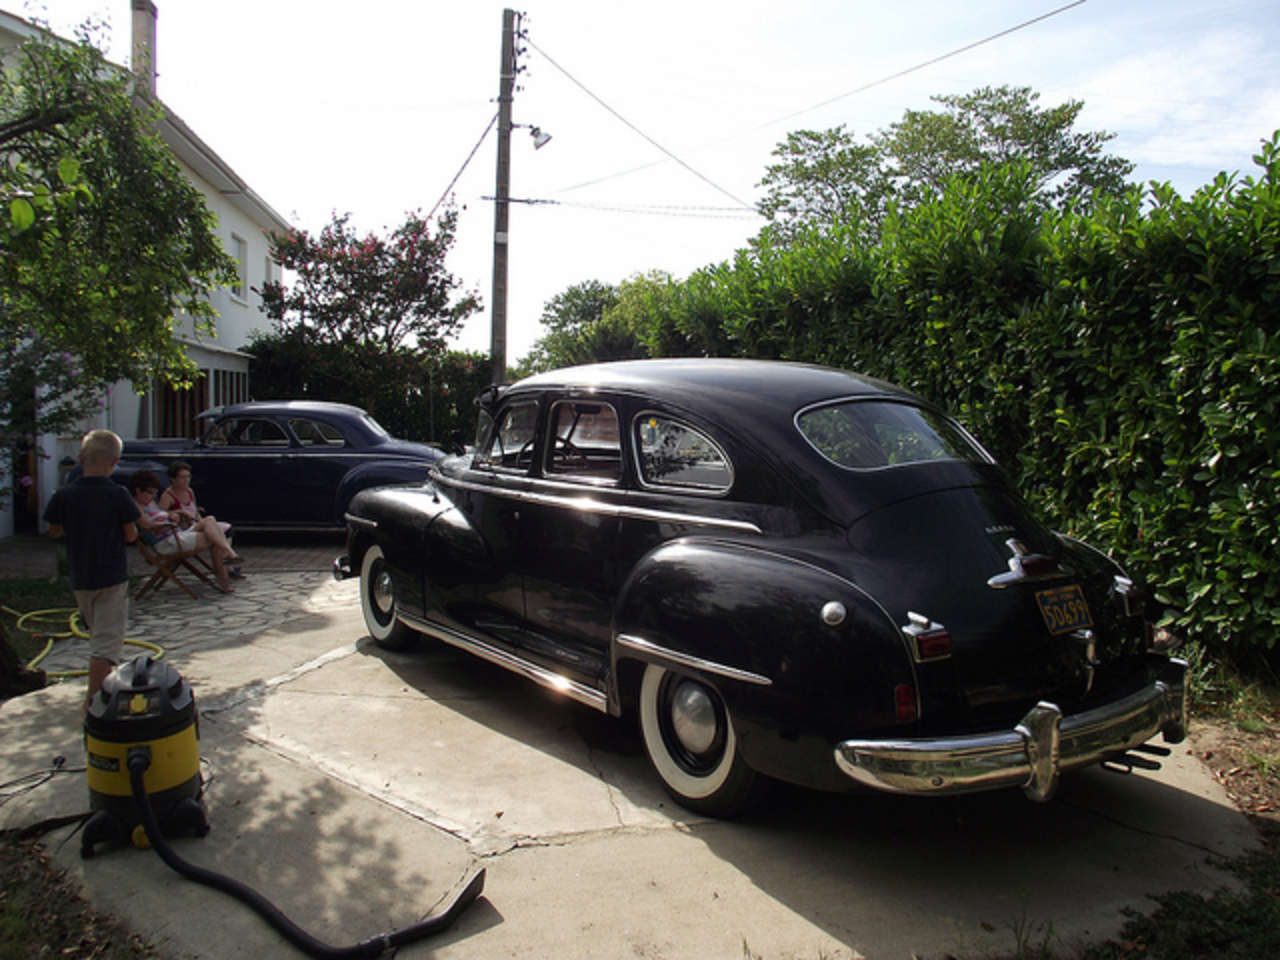 1948 dodge custom sedan and 1941 dodge club coupe | Flickr - Photo ...